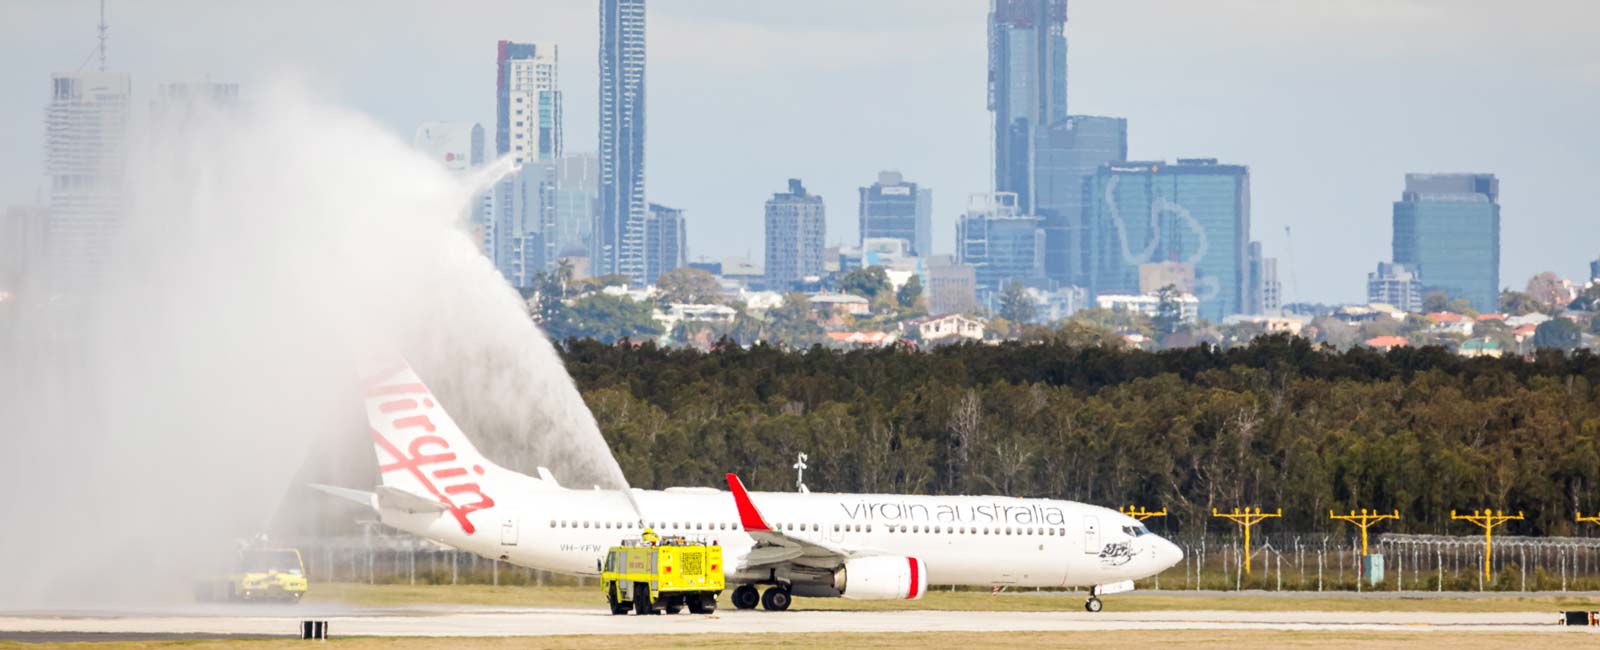 First departure on Brisbane's new runway - Virgin Australia